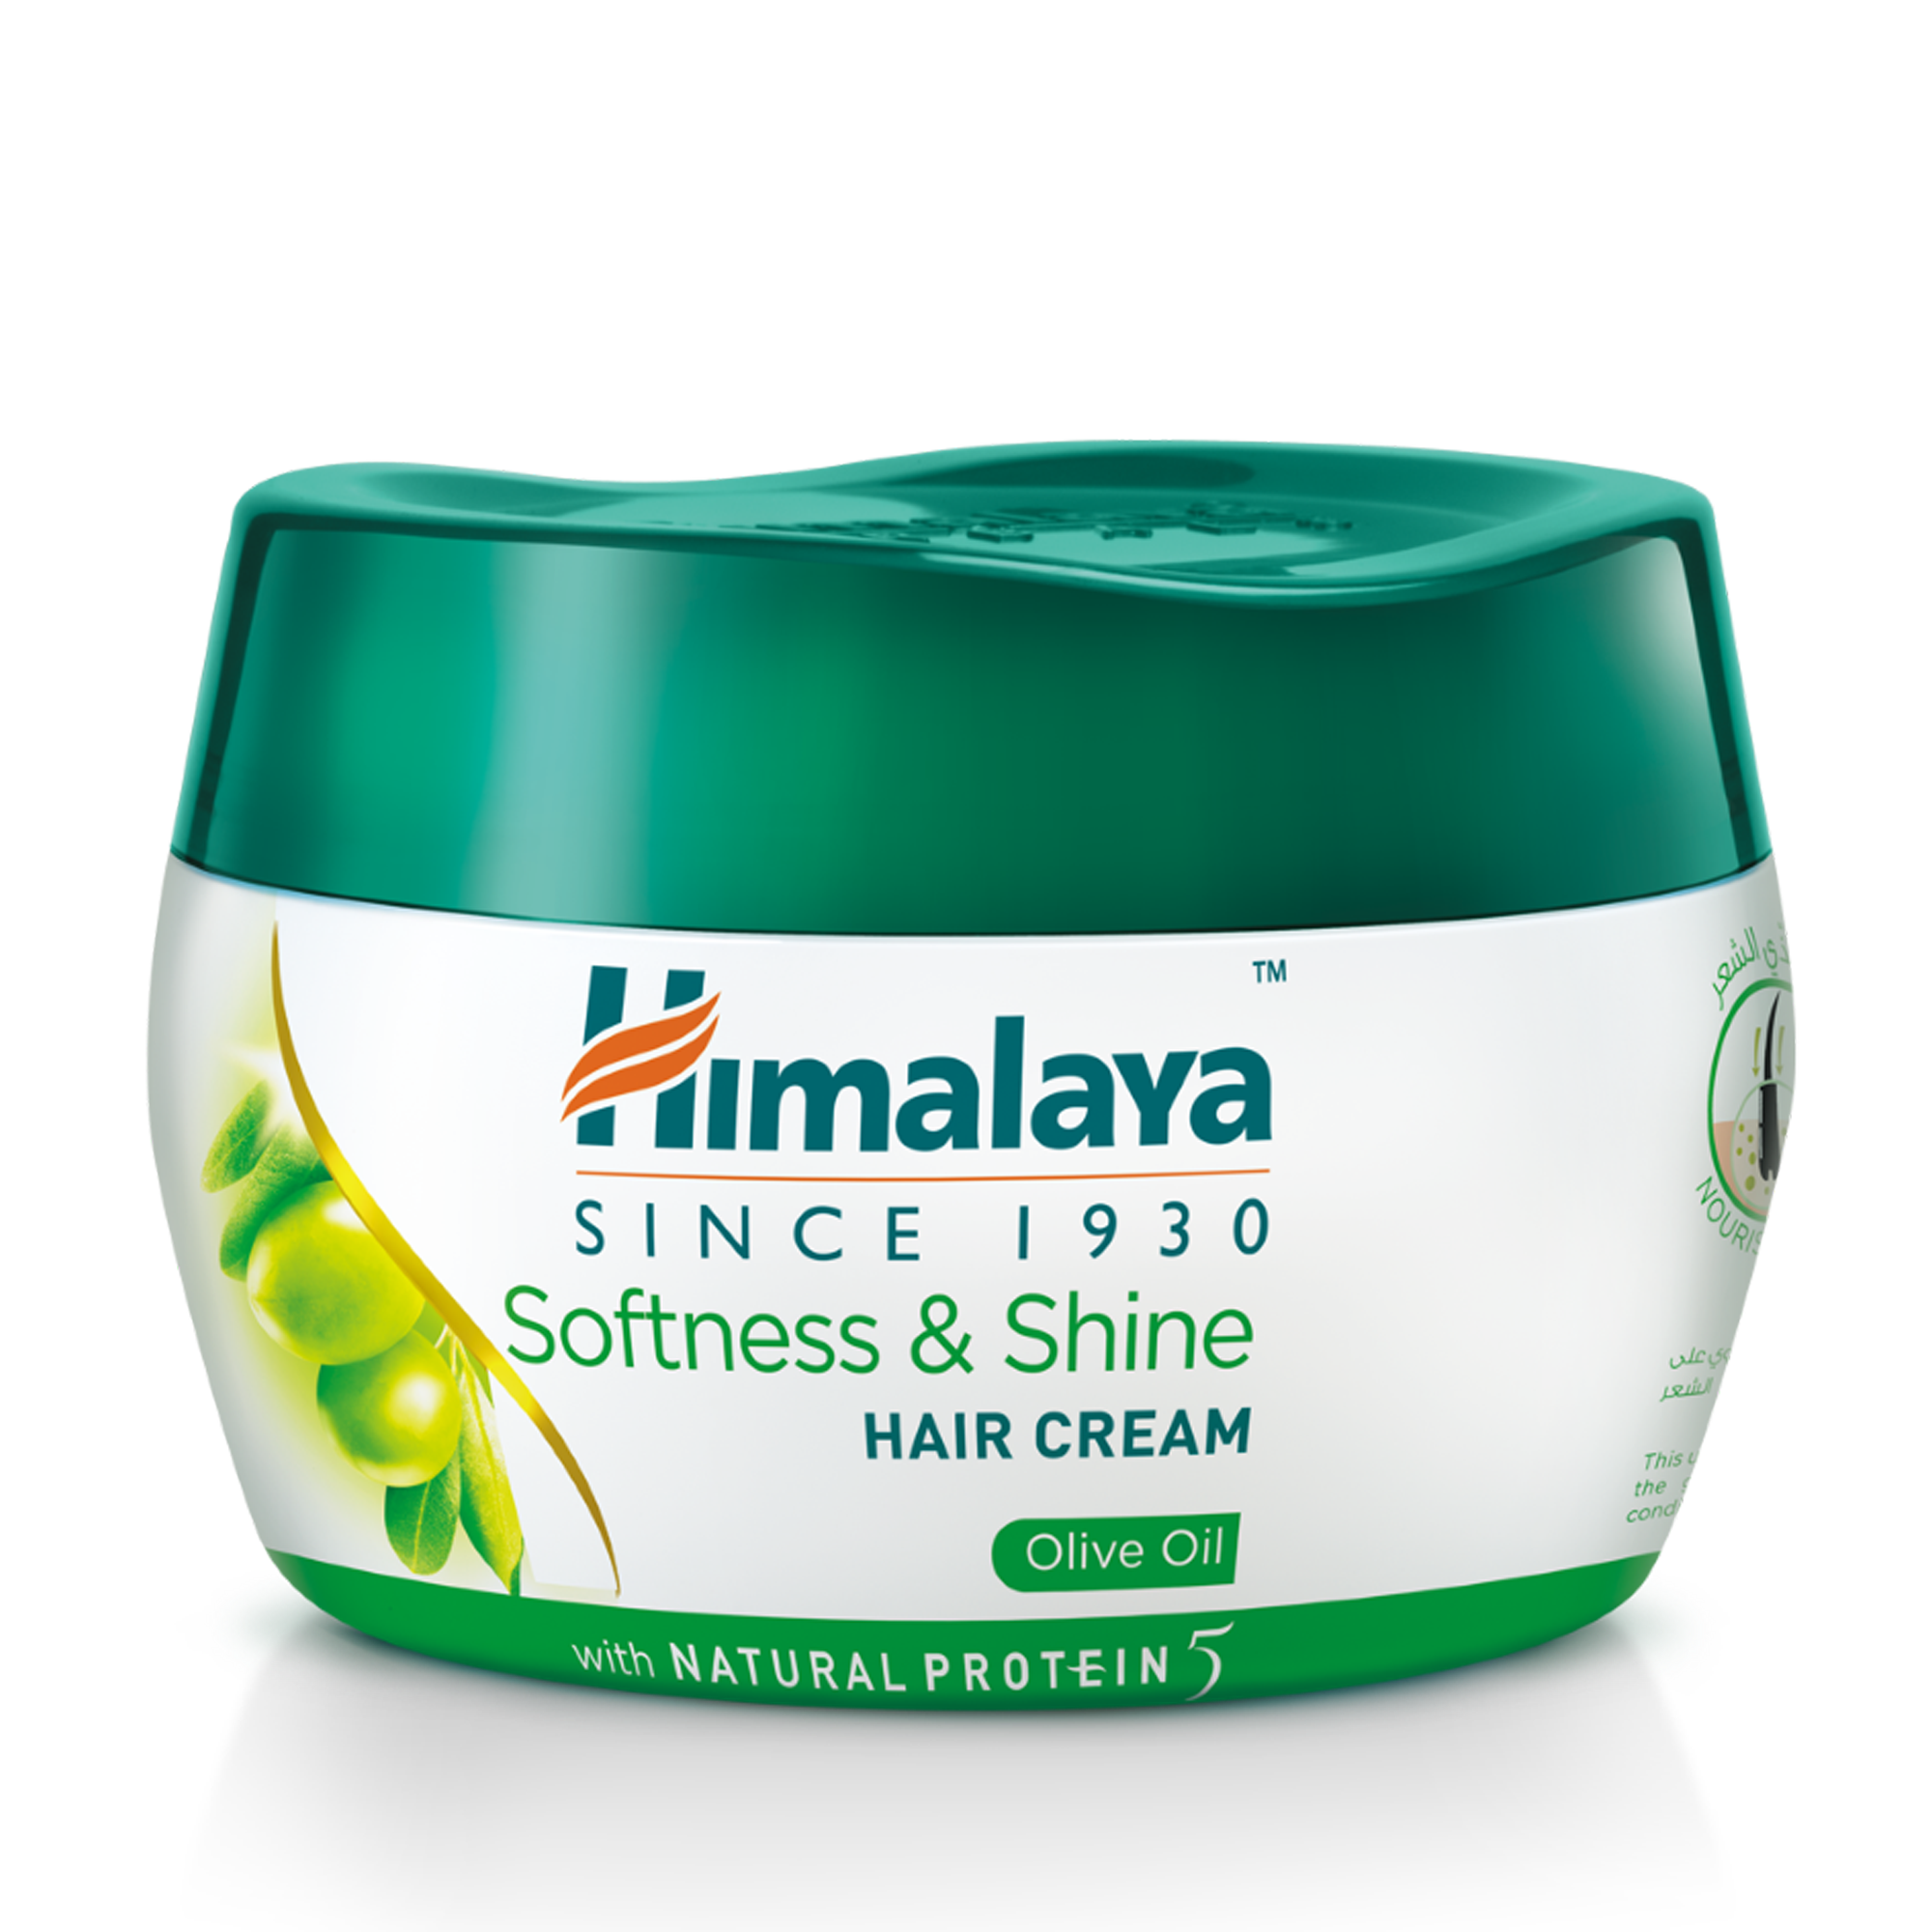 Himalaya Softness & Shine Hair Cream 210ml - Conditions Your Hair